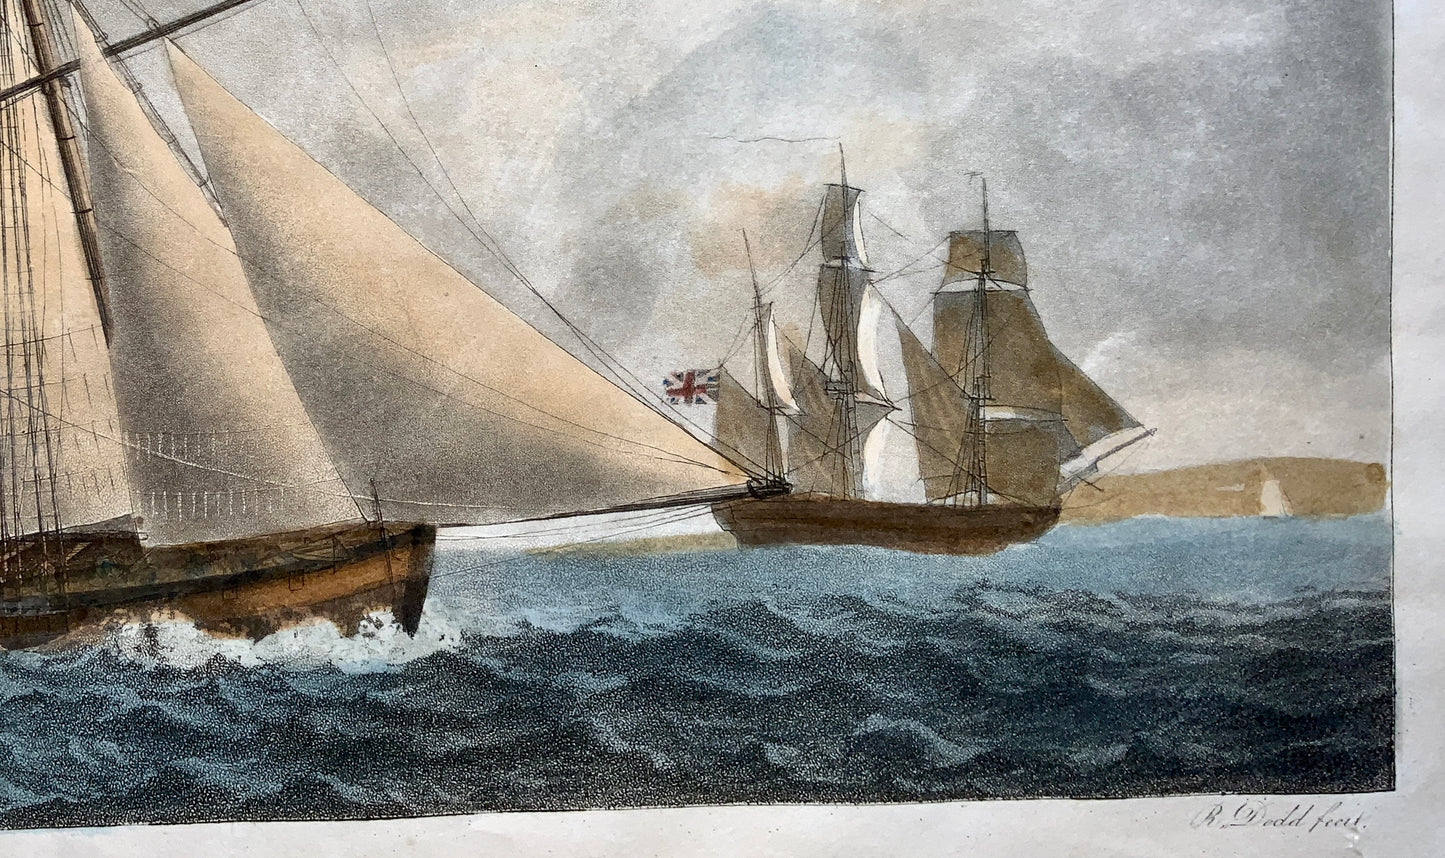 1795 Robert Dodd - A Cutter and Frigates - Sailing Ships, Maritime - Aquatint hand colour